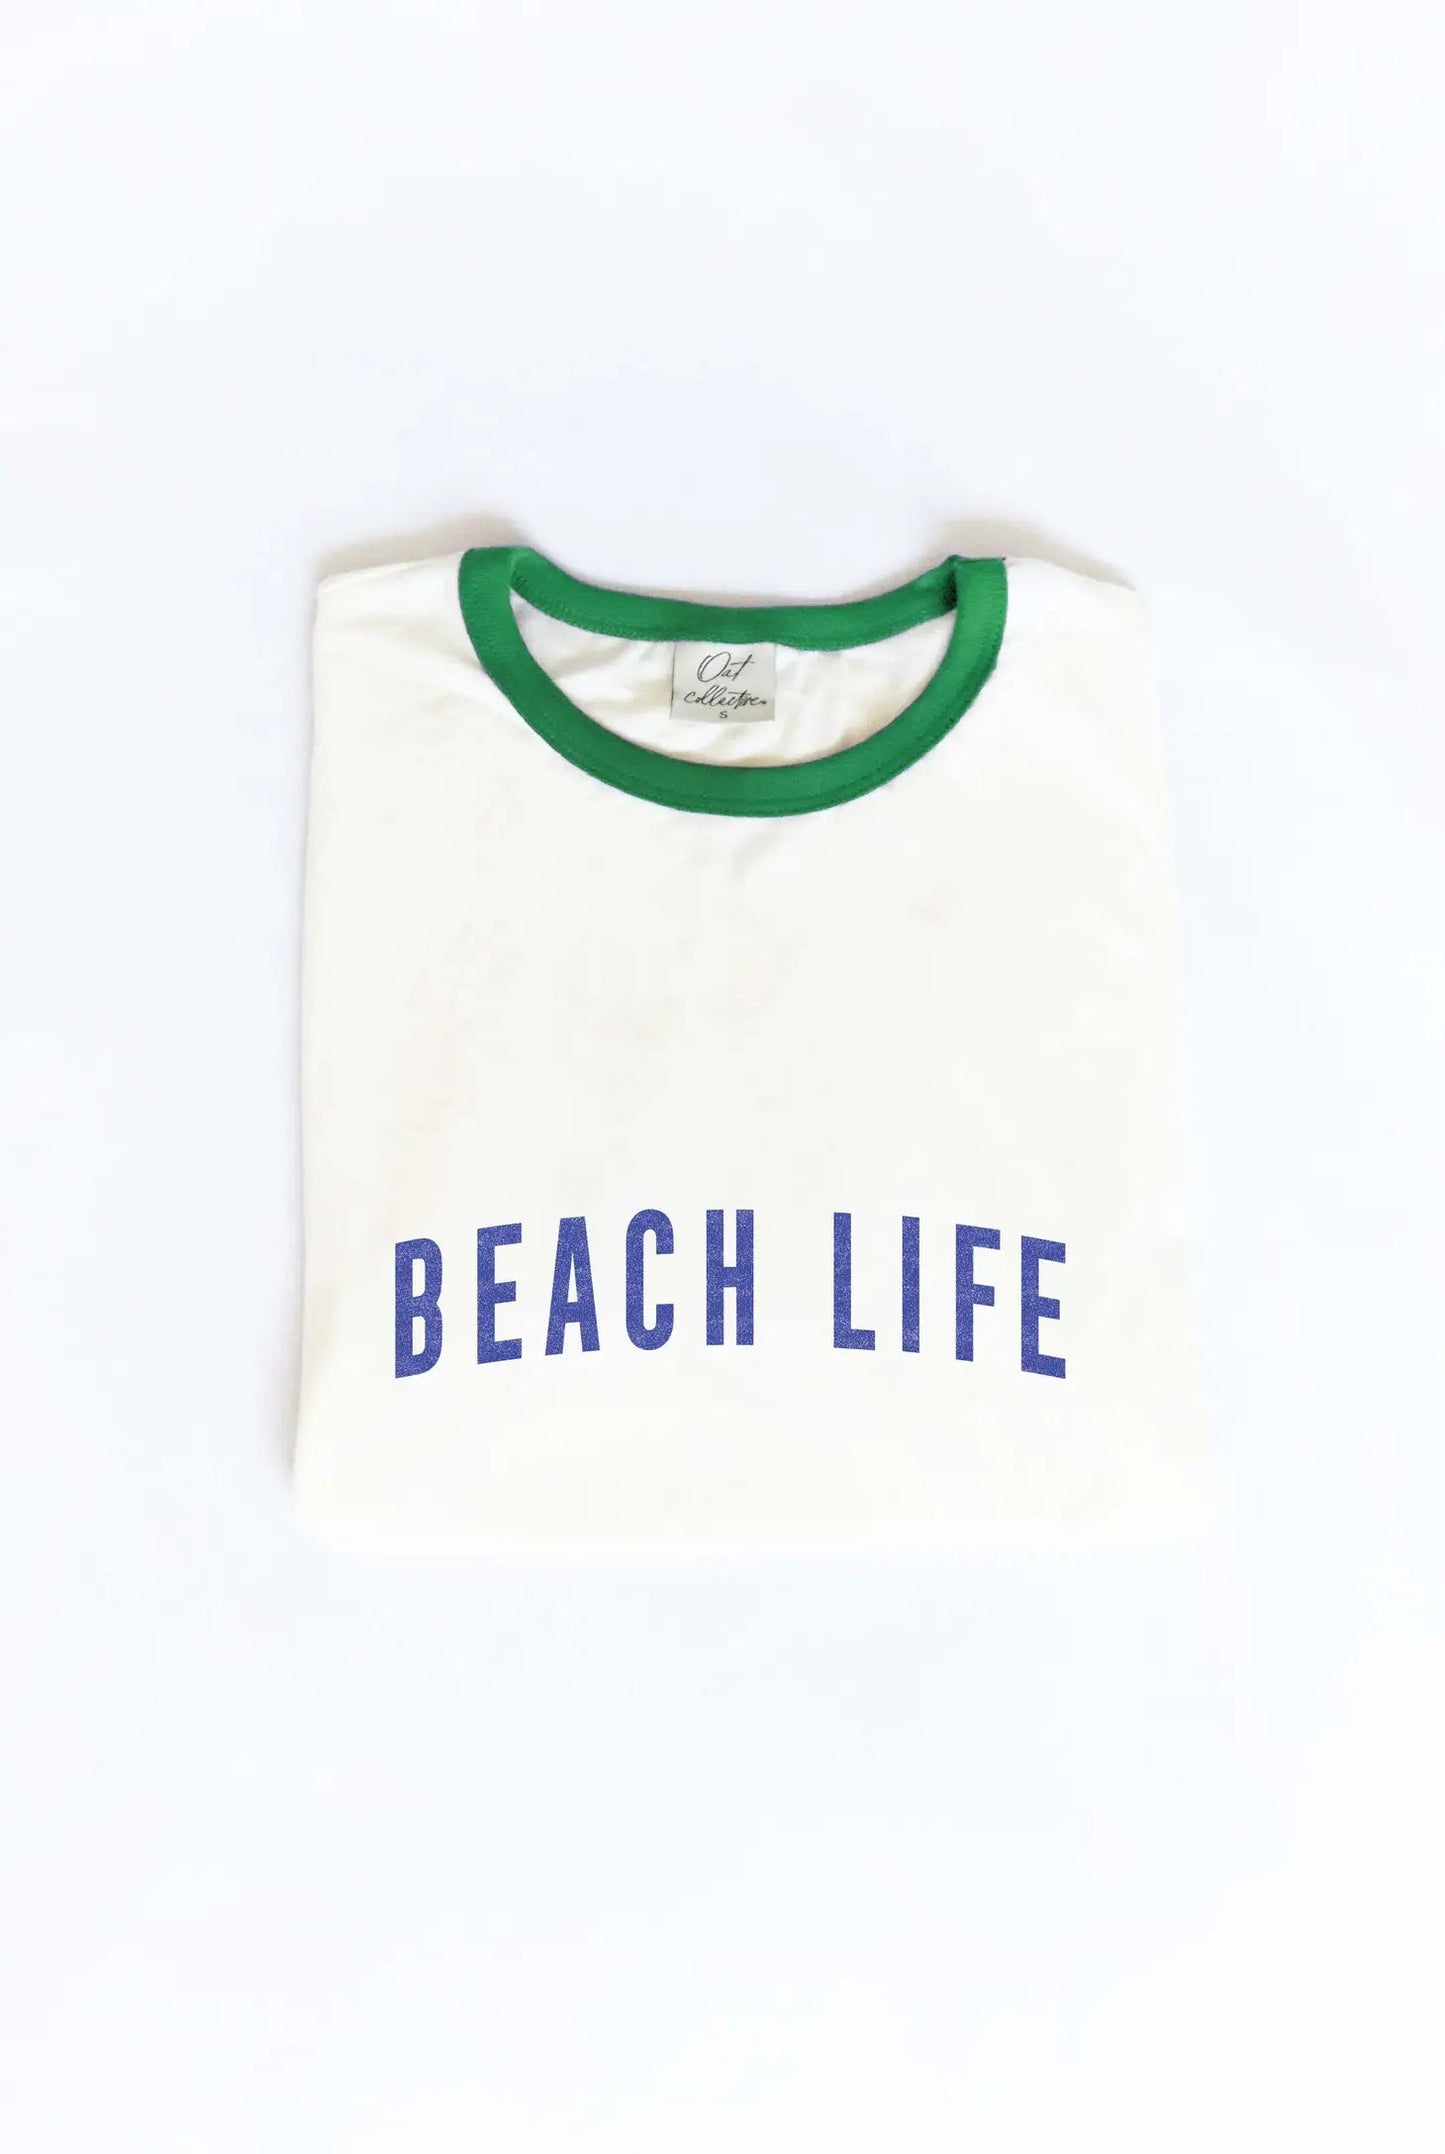 Beach Life Ringer Graphic T-Shirt - The Riviera Towel Company